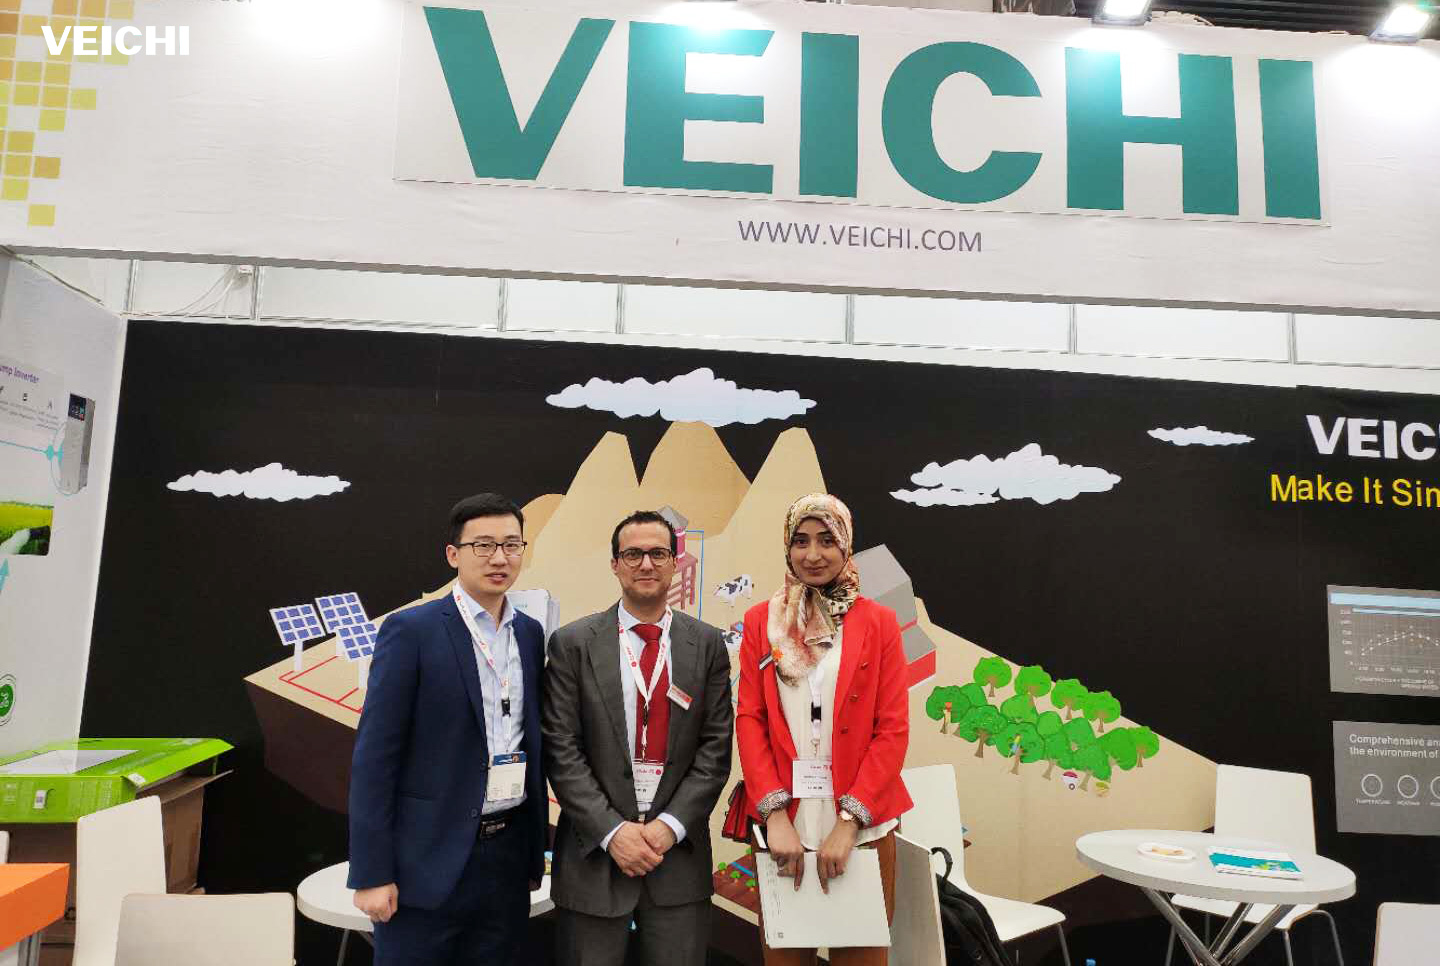 VEICHI team communicates with customers